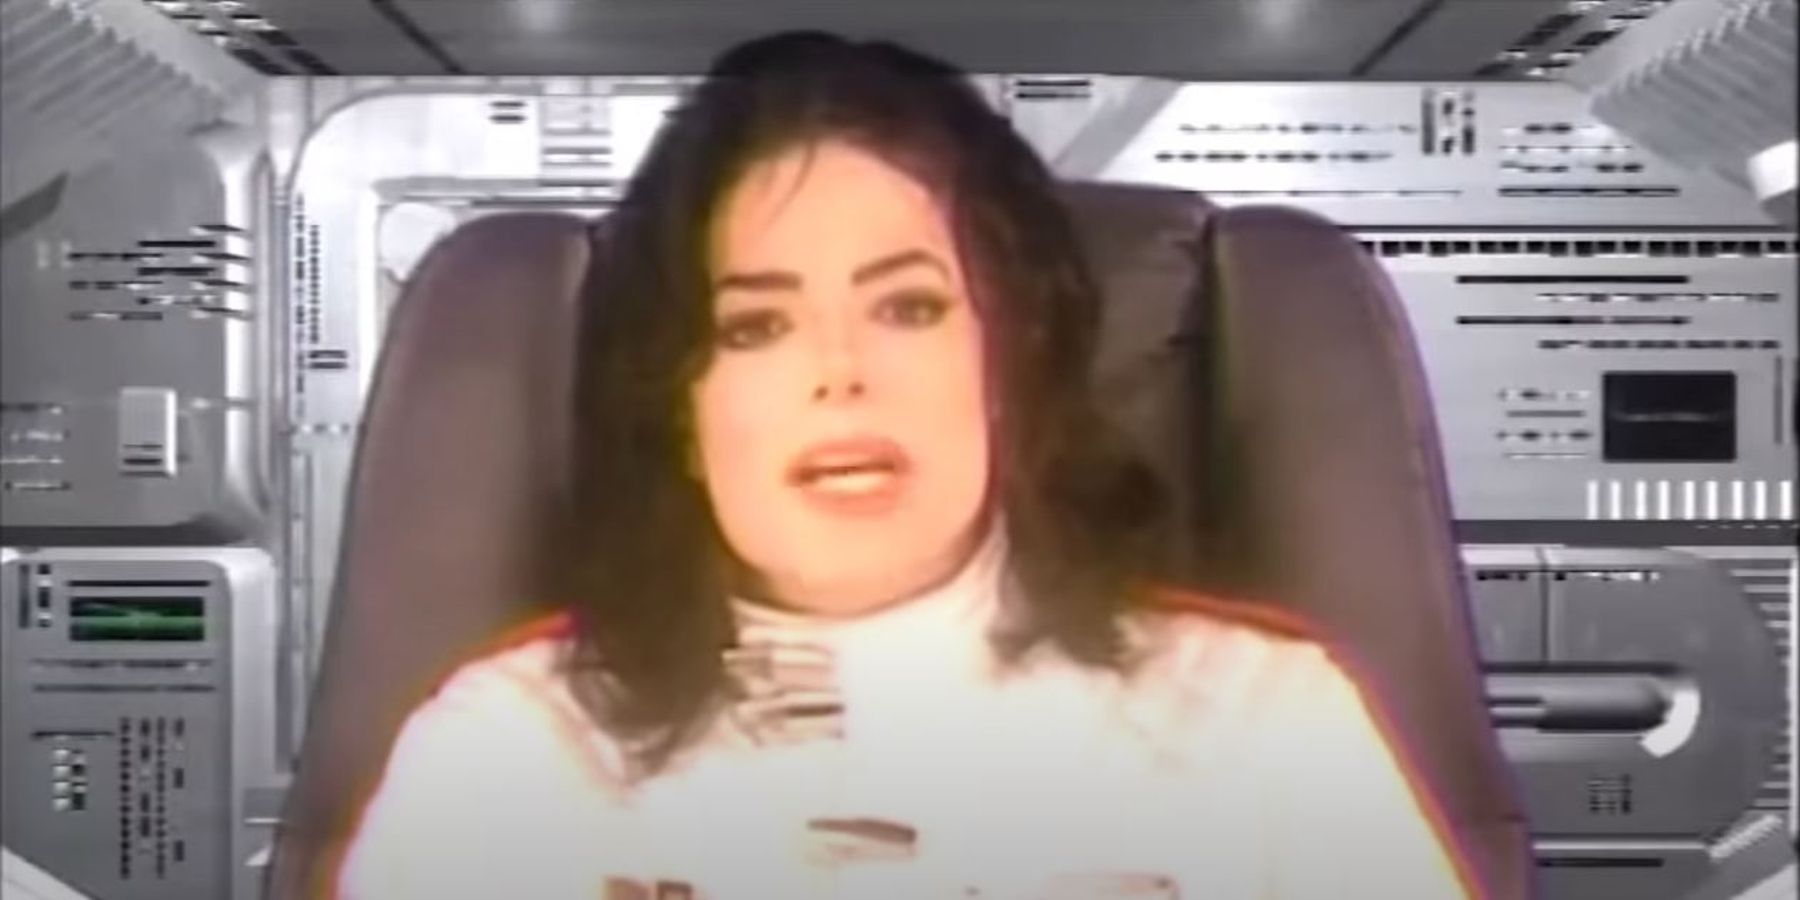 Michael Jackson in Scramble Training